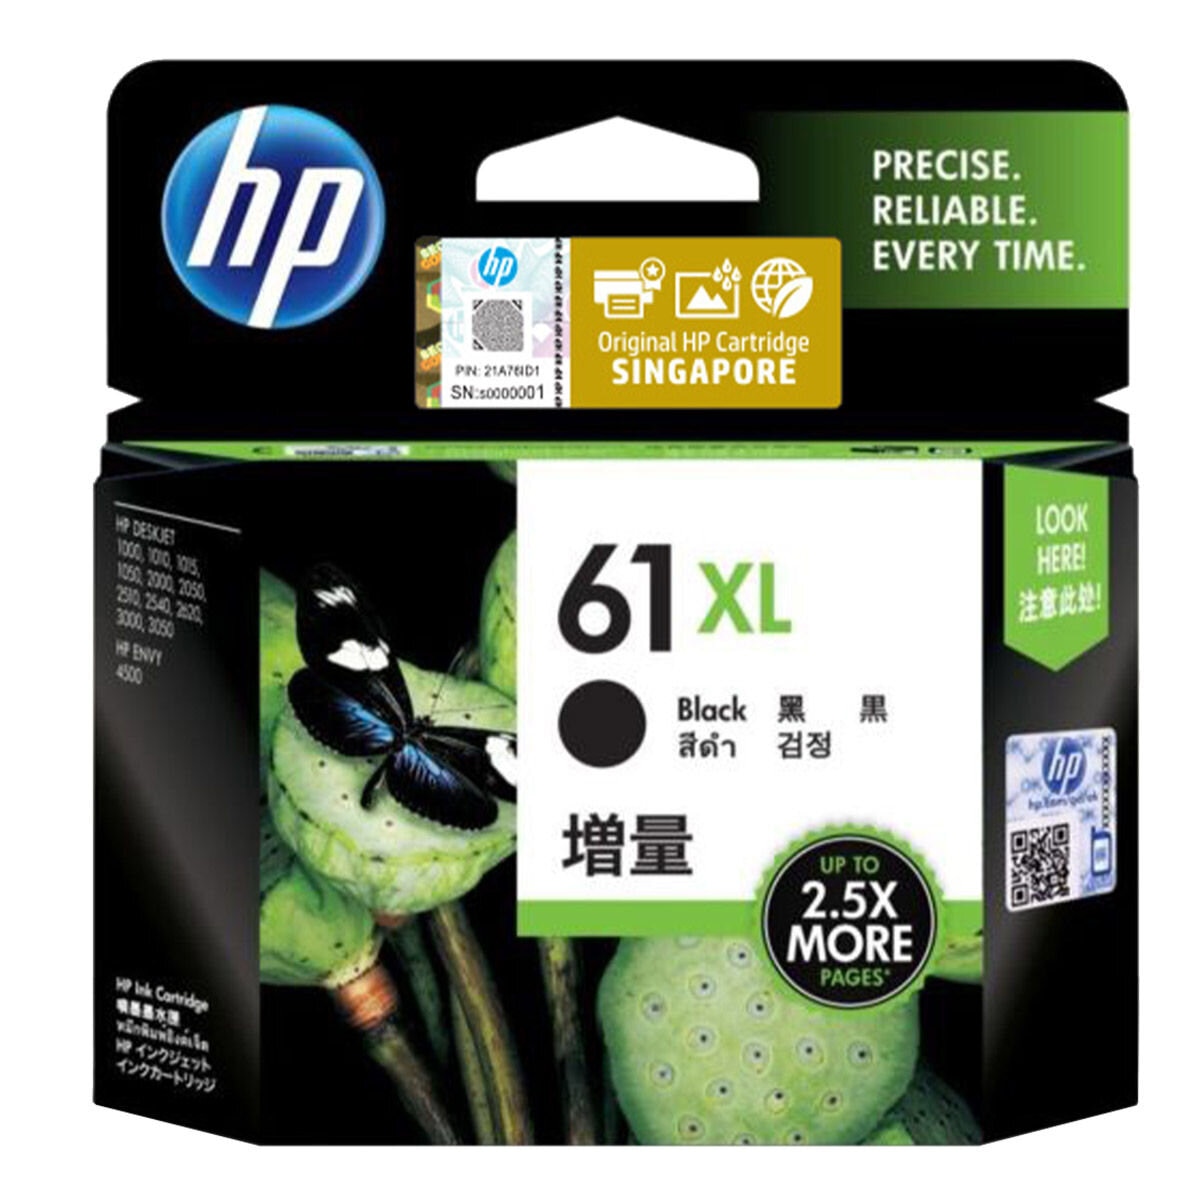 HP 61XL 墨水組合 - 黑 X 1 + 彩色組 X 1